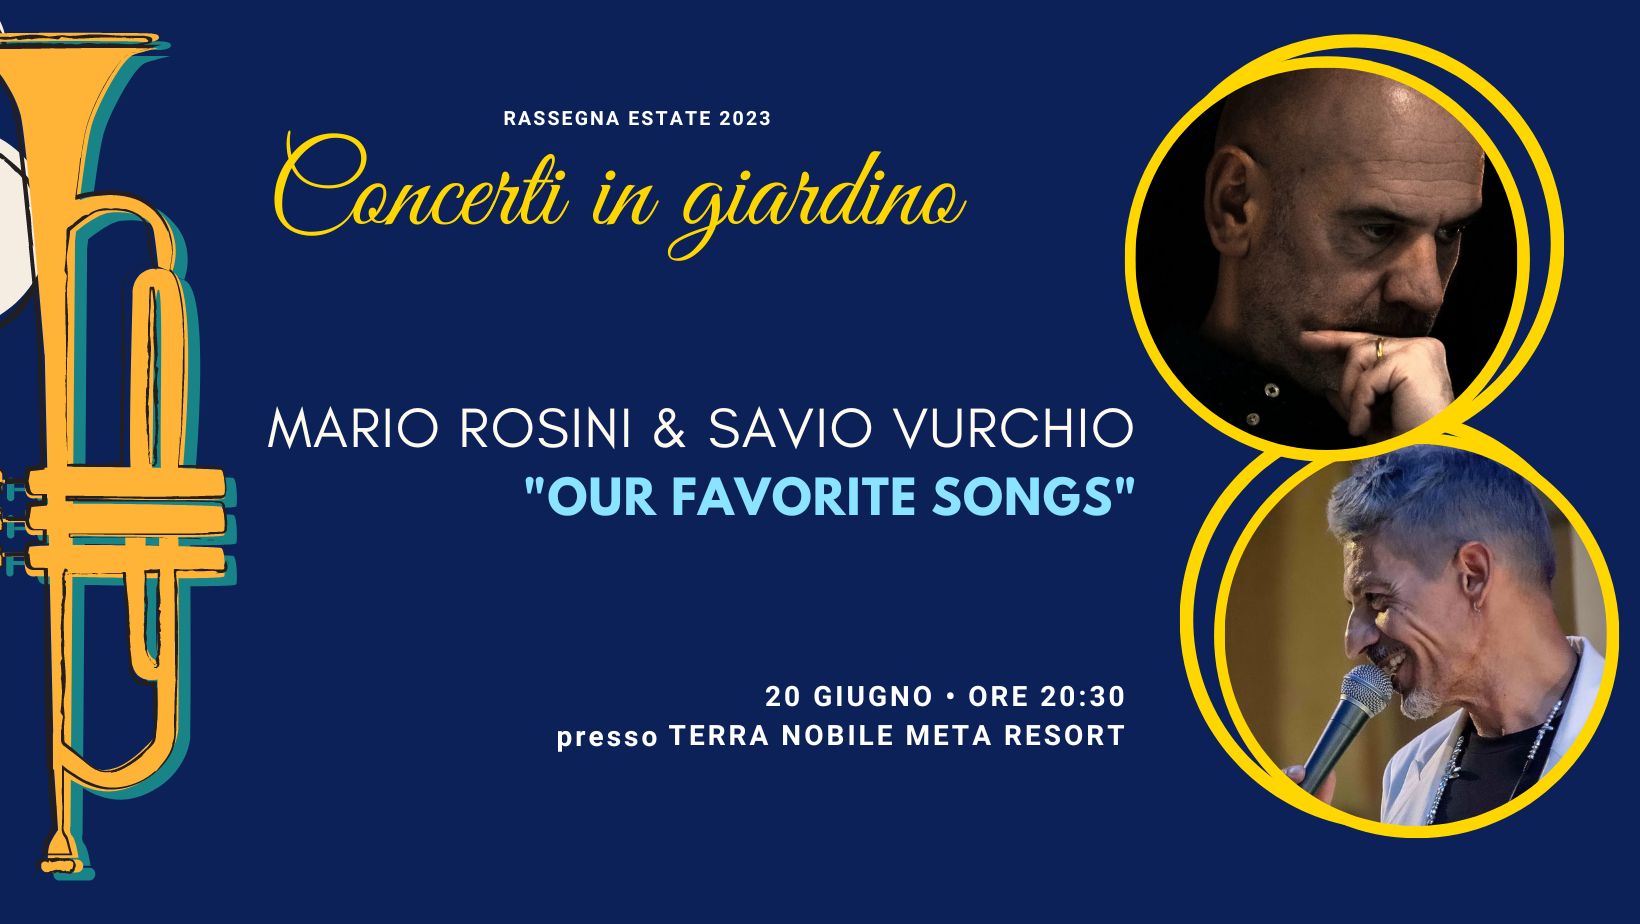 Concerti in giardino – Mario Rosini & Savio Vurchio